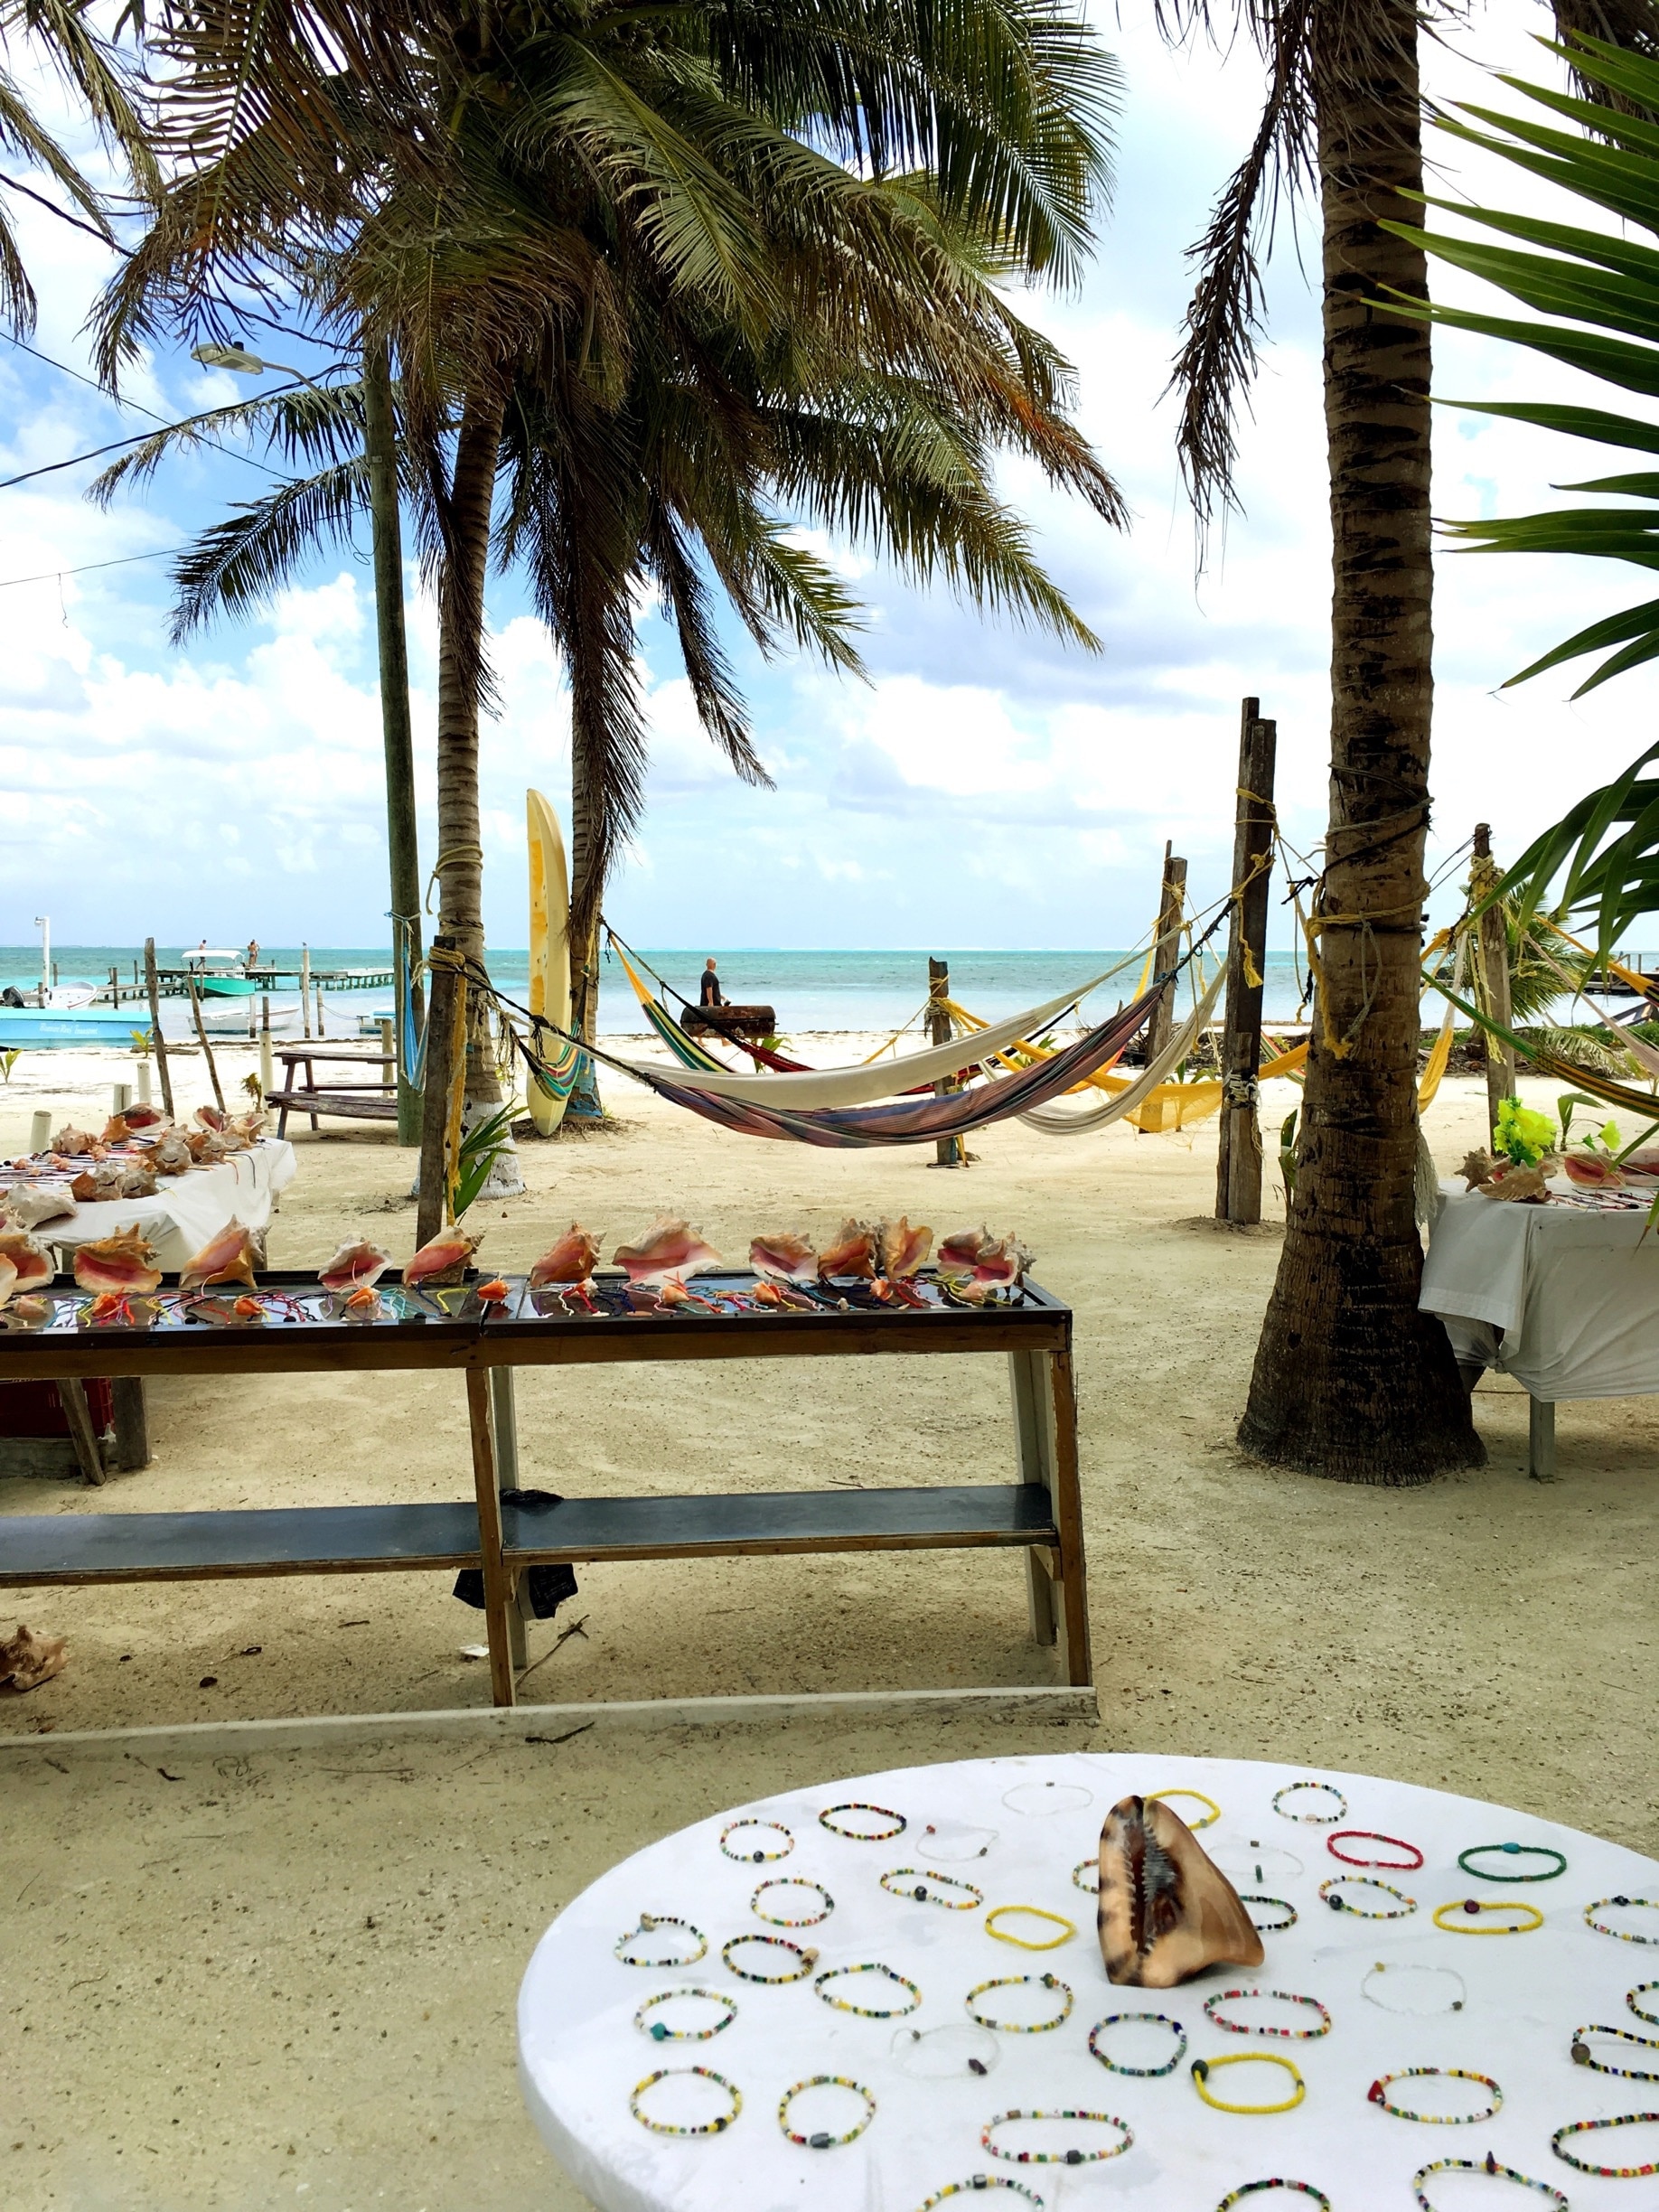 My Caribbean Paradise! #Belize #BeachBound #vacation  